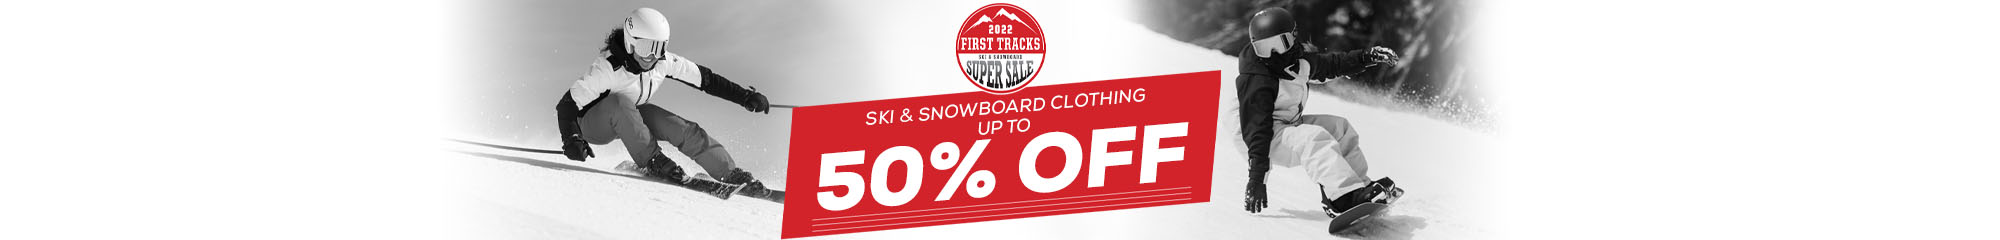 2022 First Tracks Ski & Snowboard Super Sale. Save up to 50% Off Ski & Snowboard Equipment, Apparel, & Accessories. 